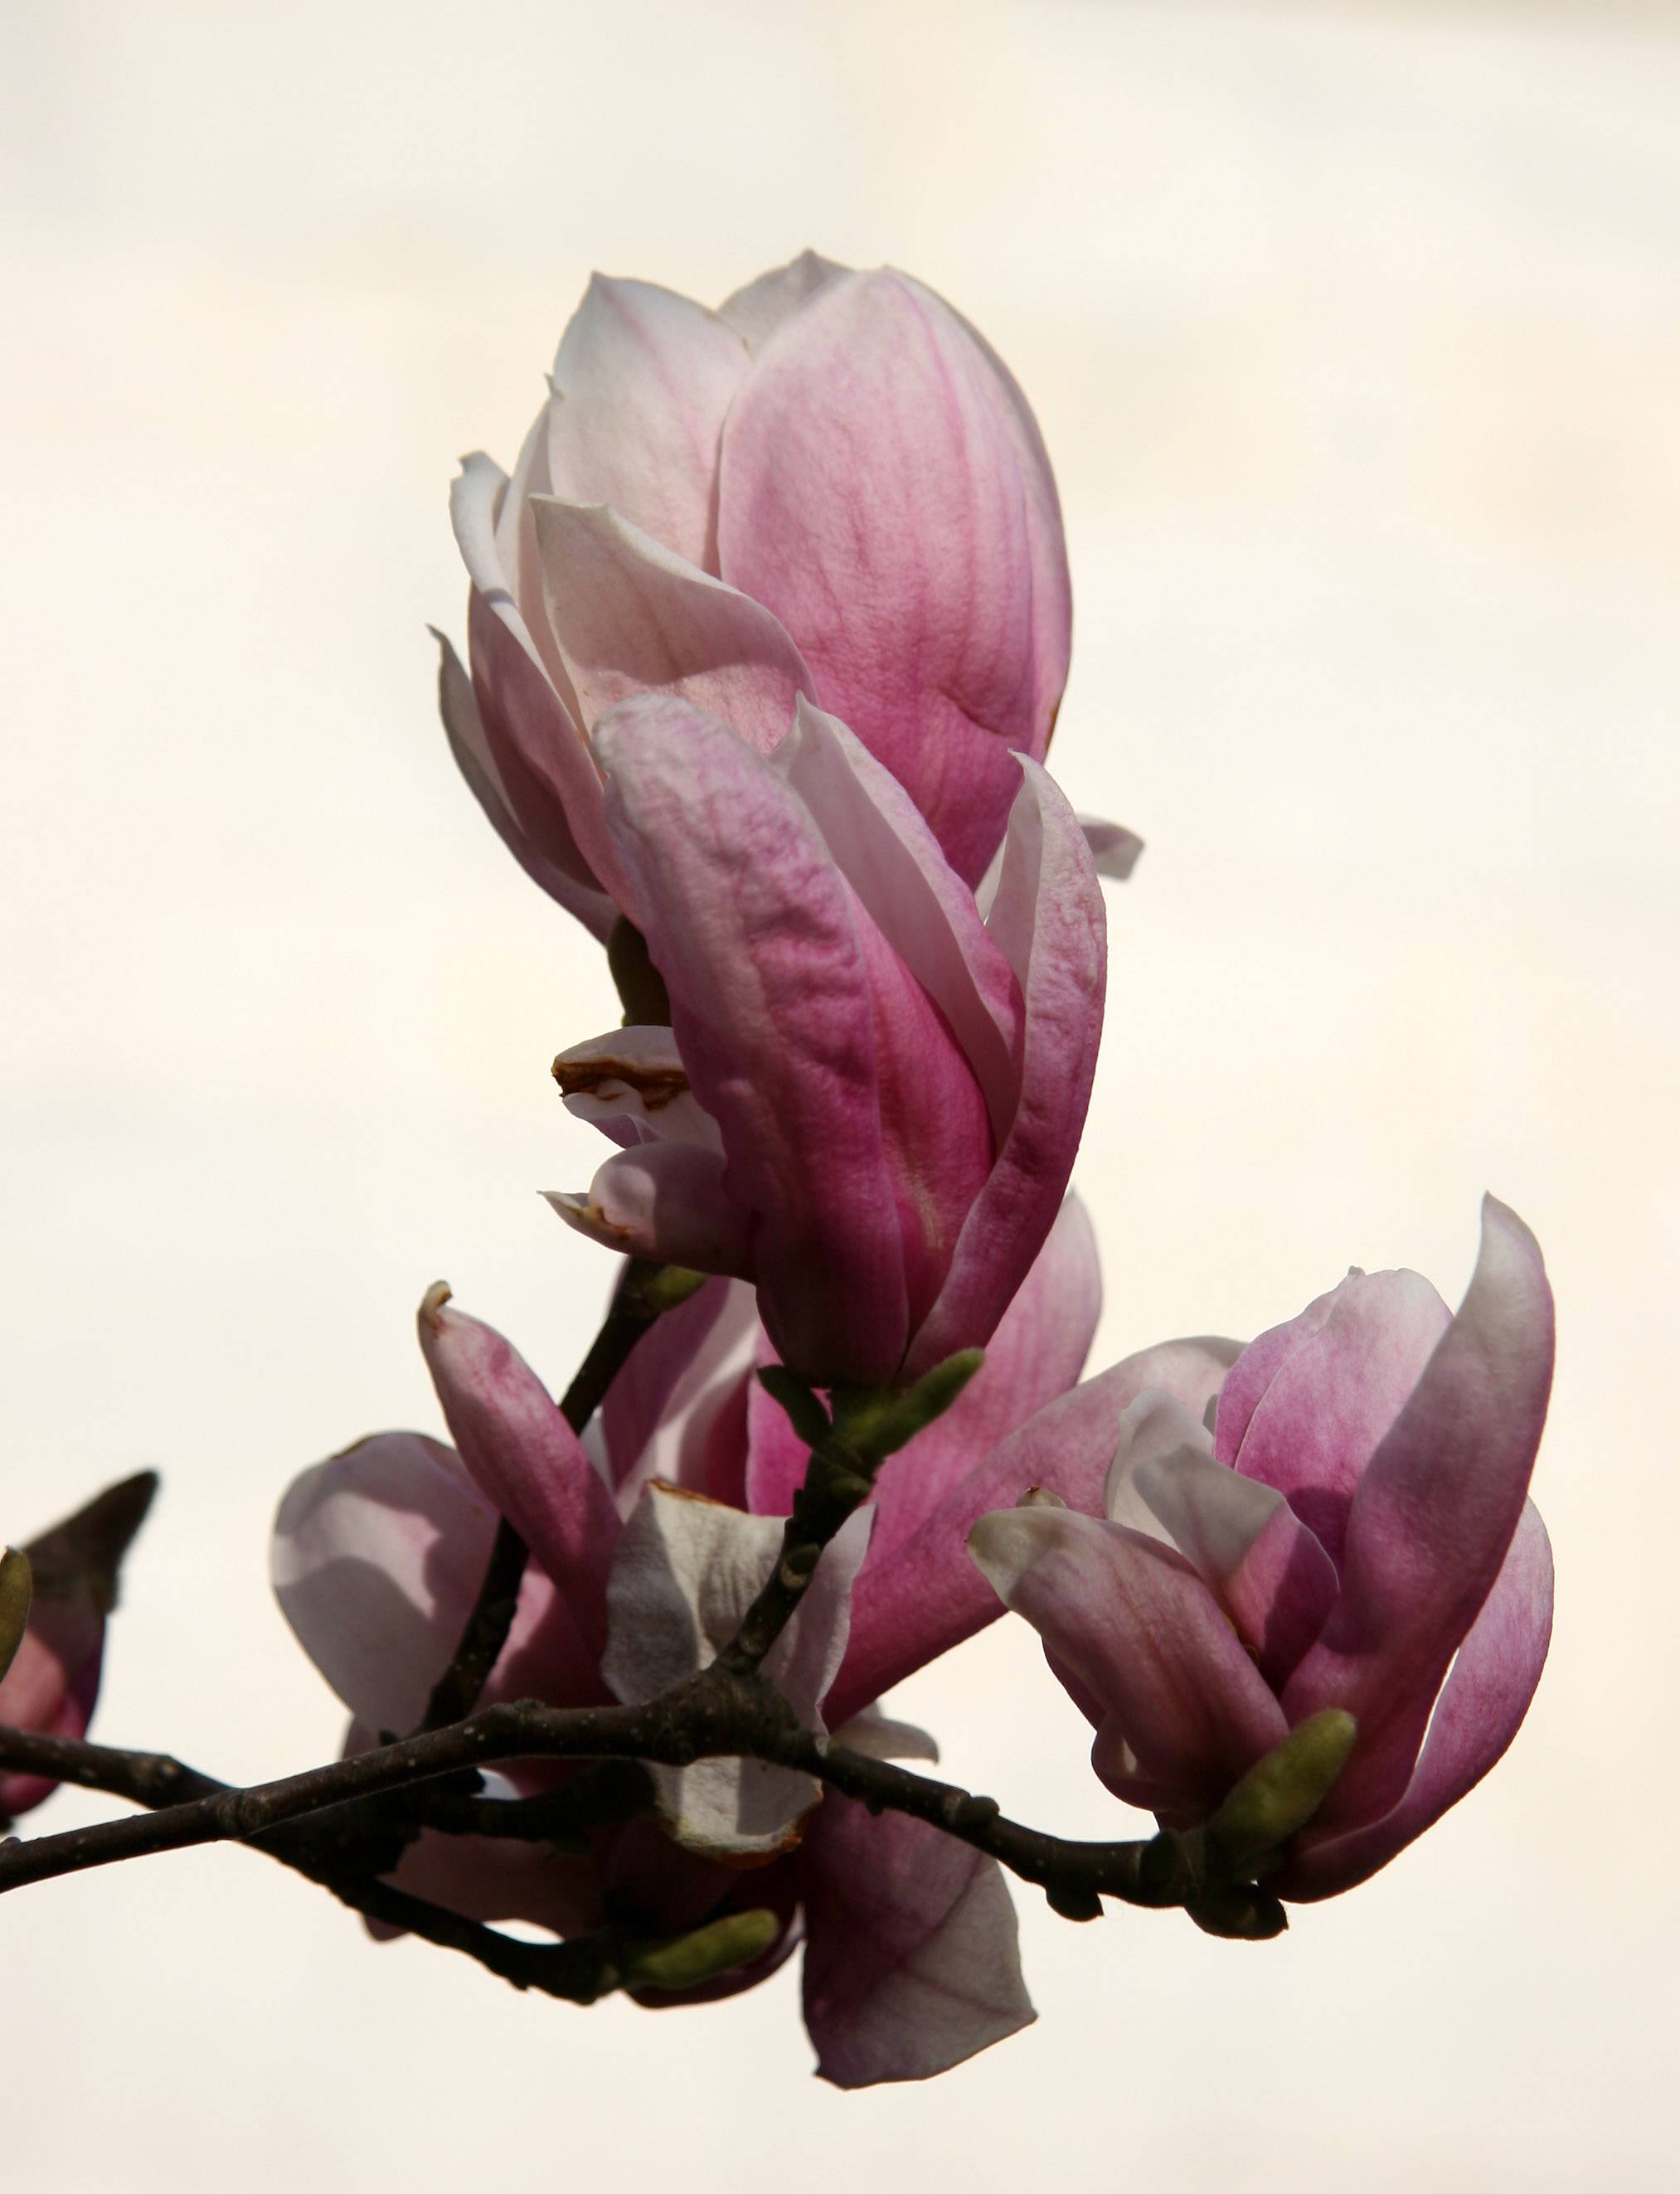 Tulip Tree or Magnolia Blossoms